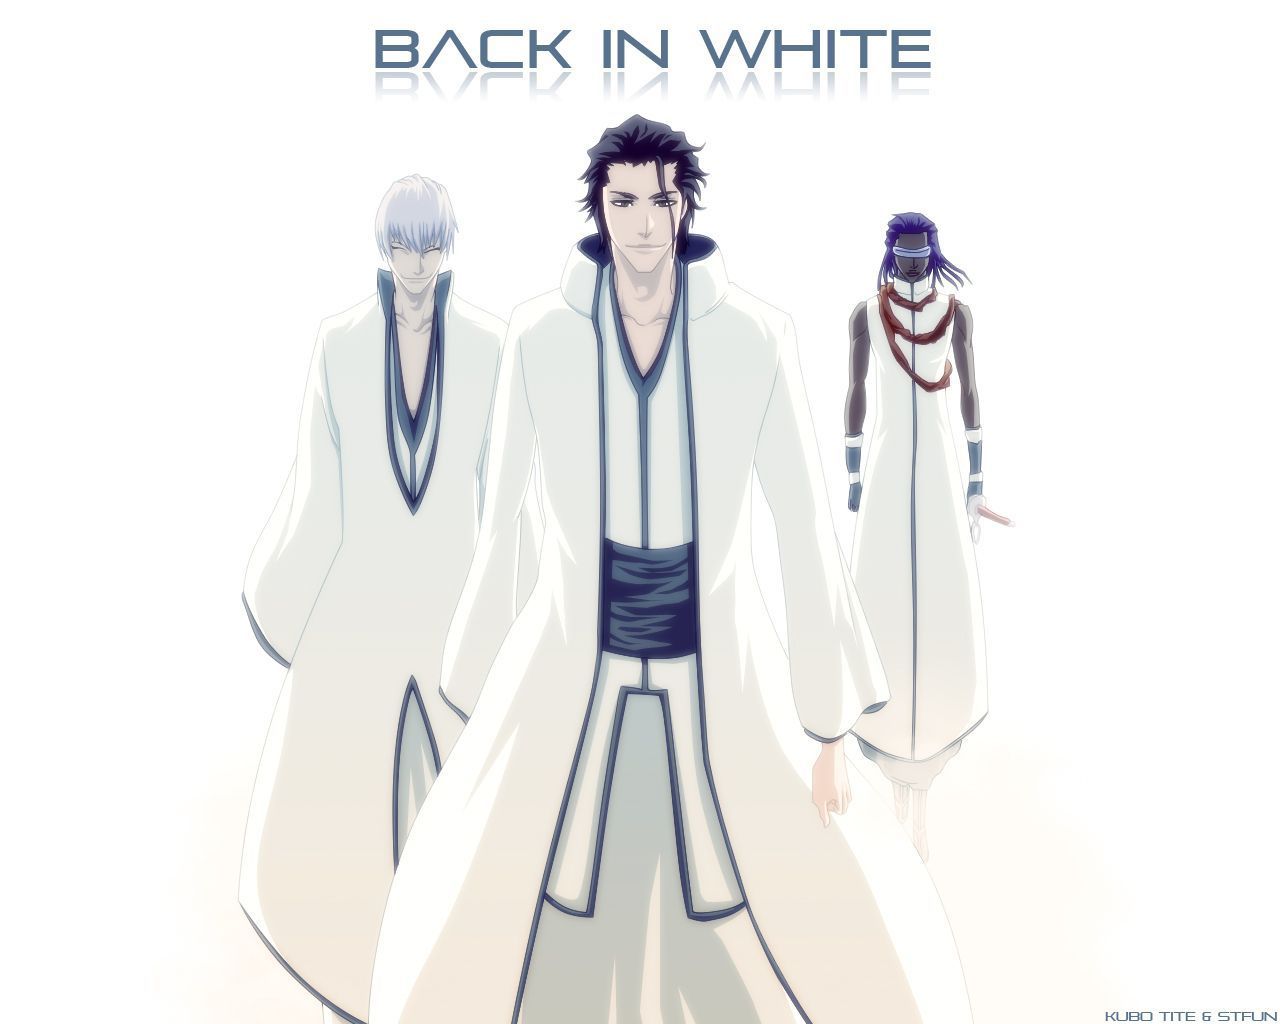 Back in white epic - Bleach Anime Wallpaper (21040651) - Fanpop